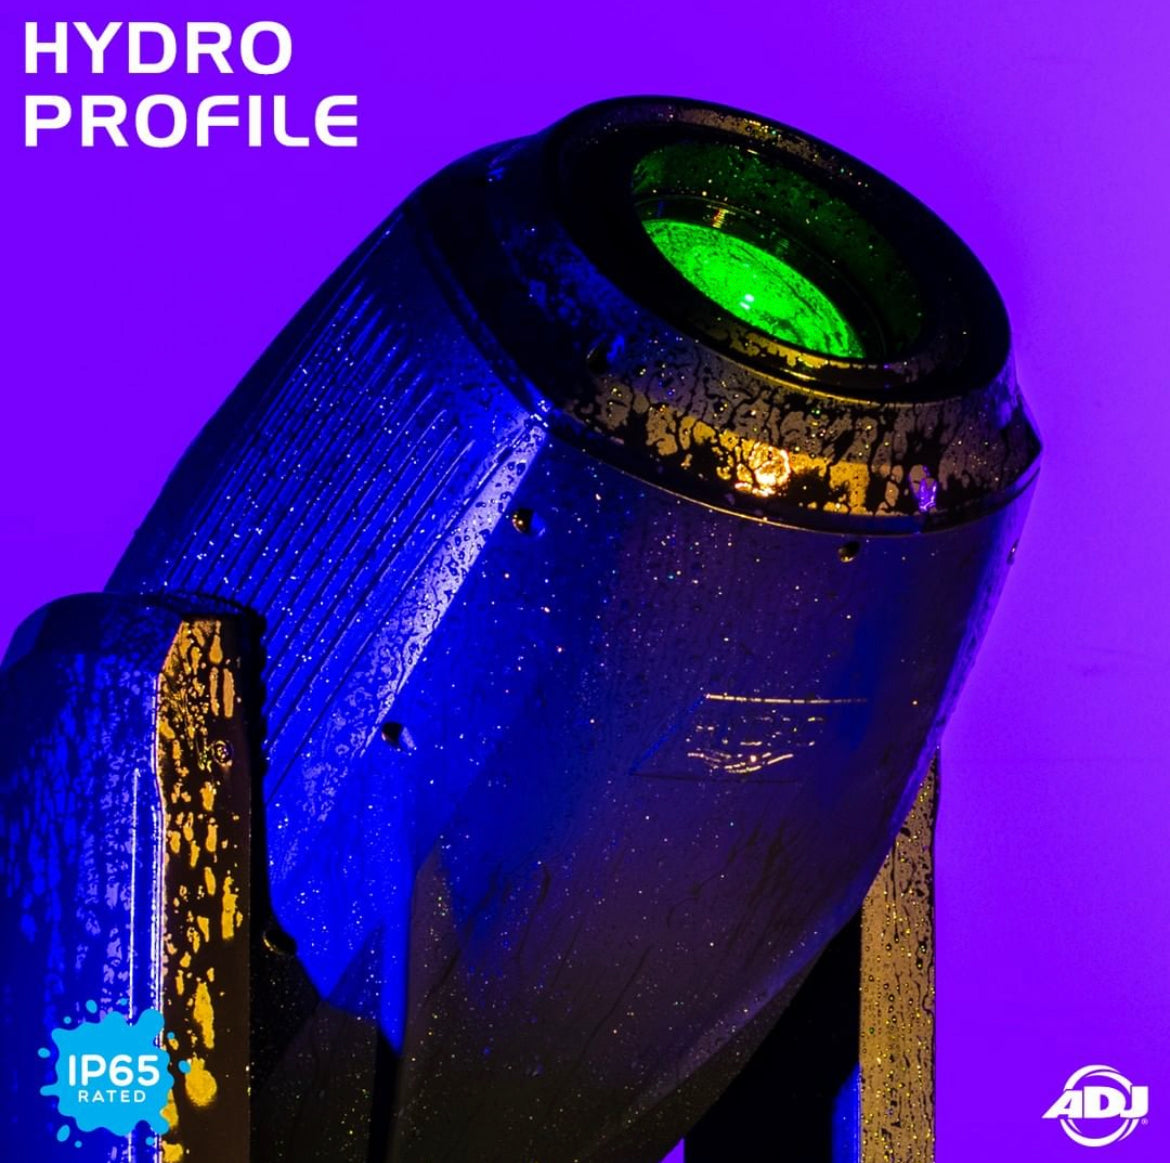 American DJ ADJ Hydro Profile 660-Watt IP65-rated LED Moving Head